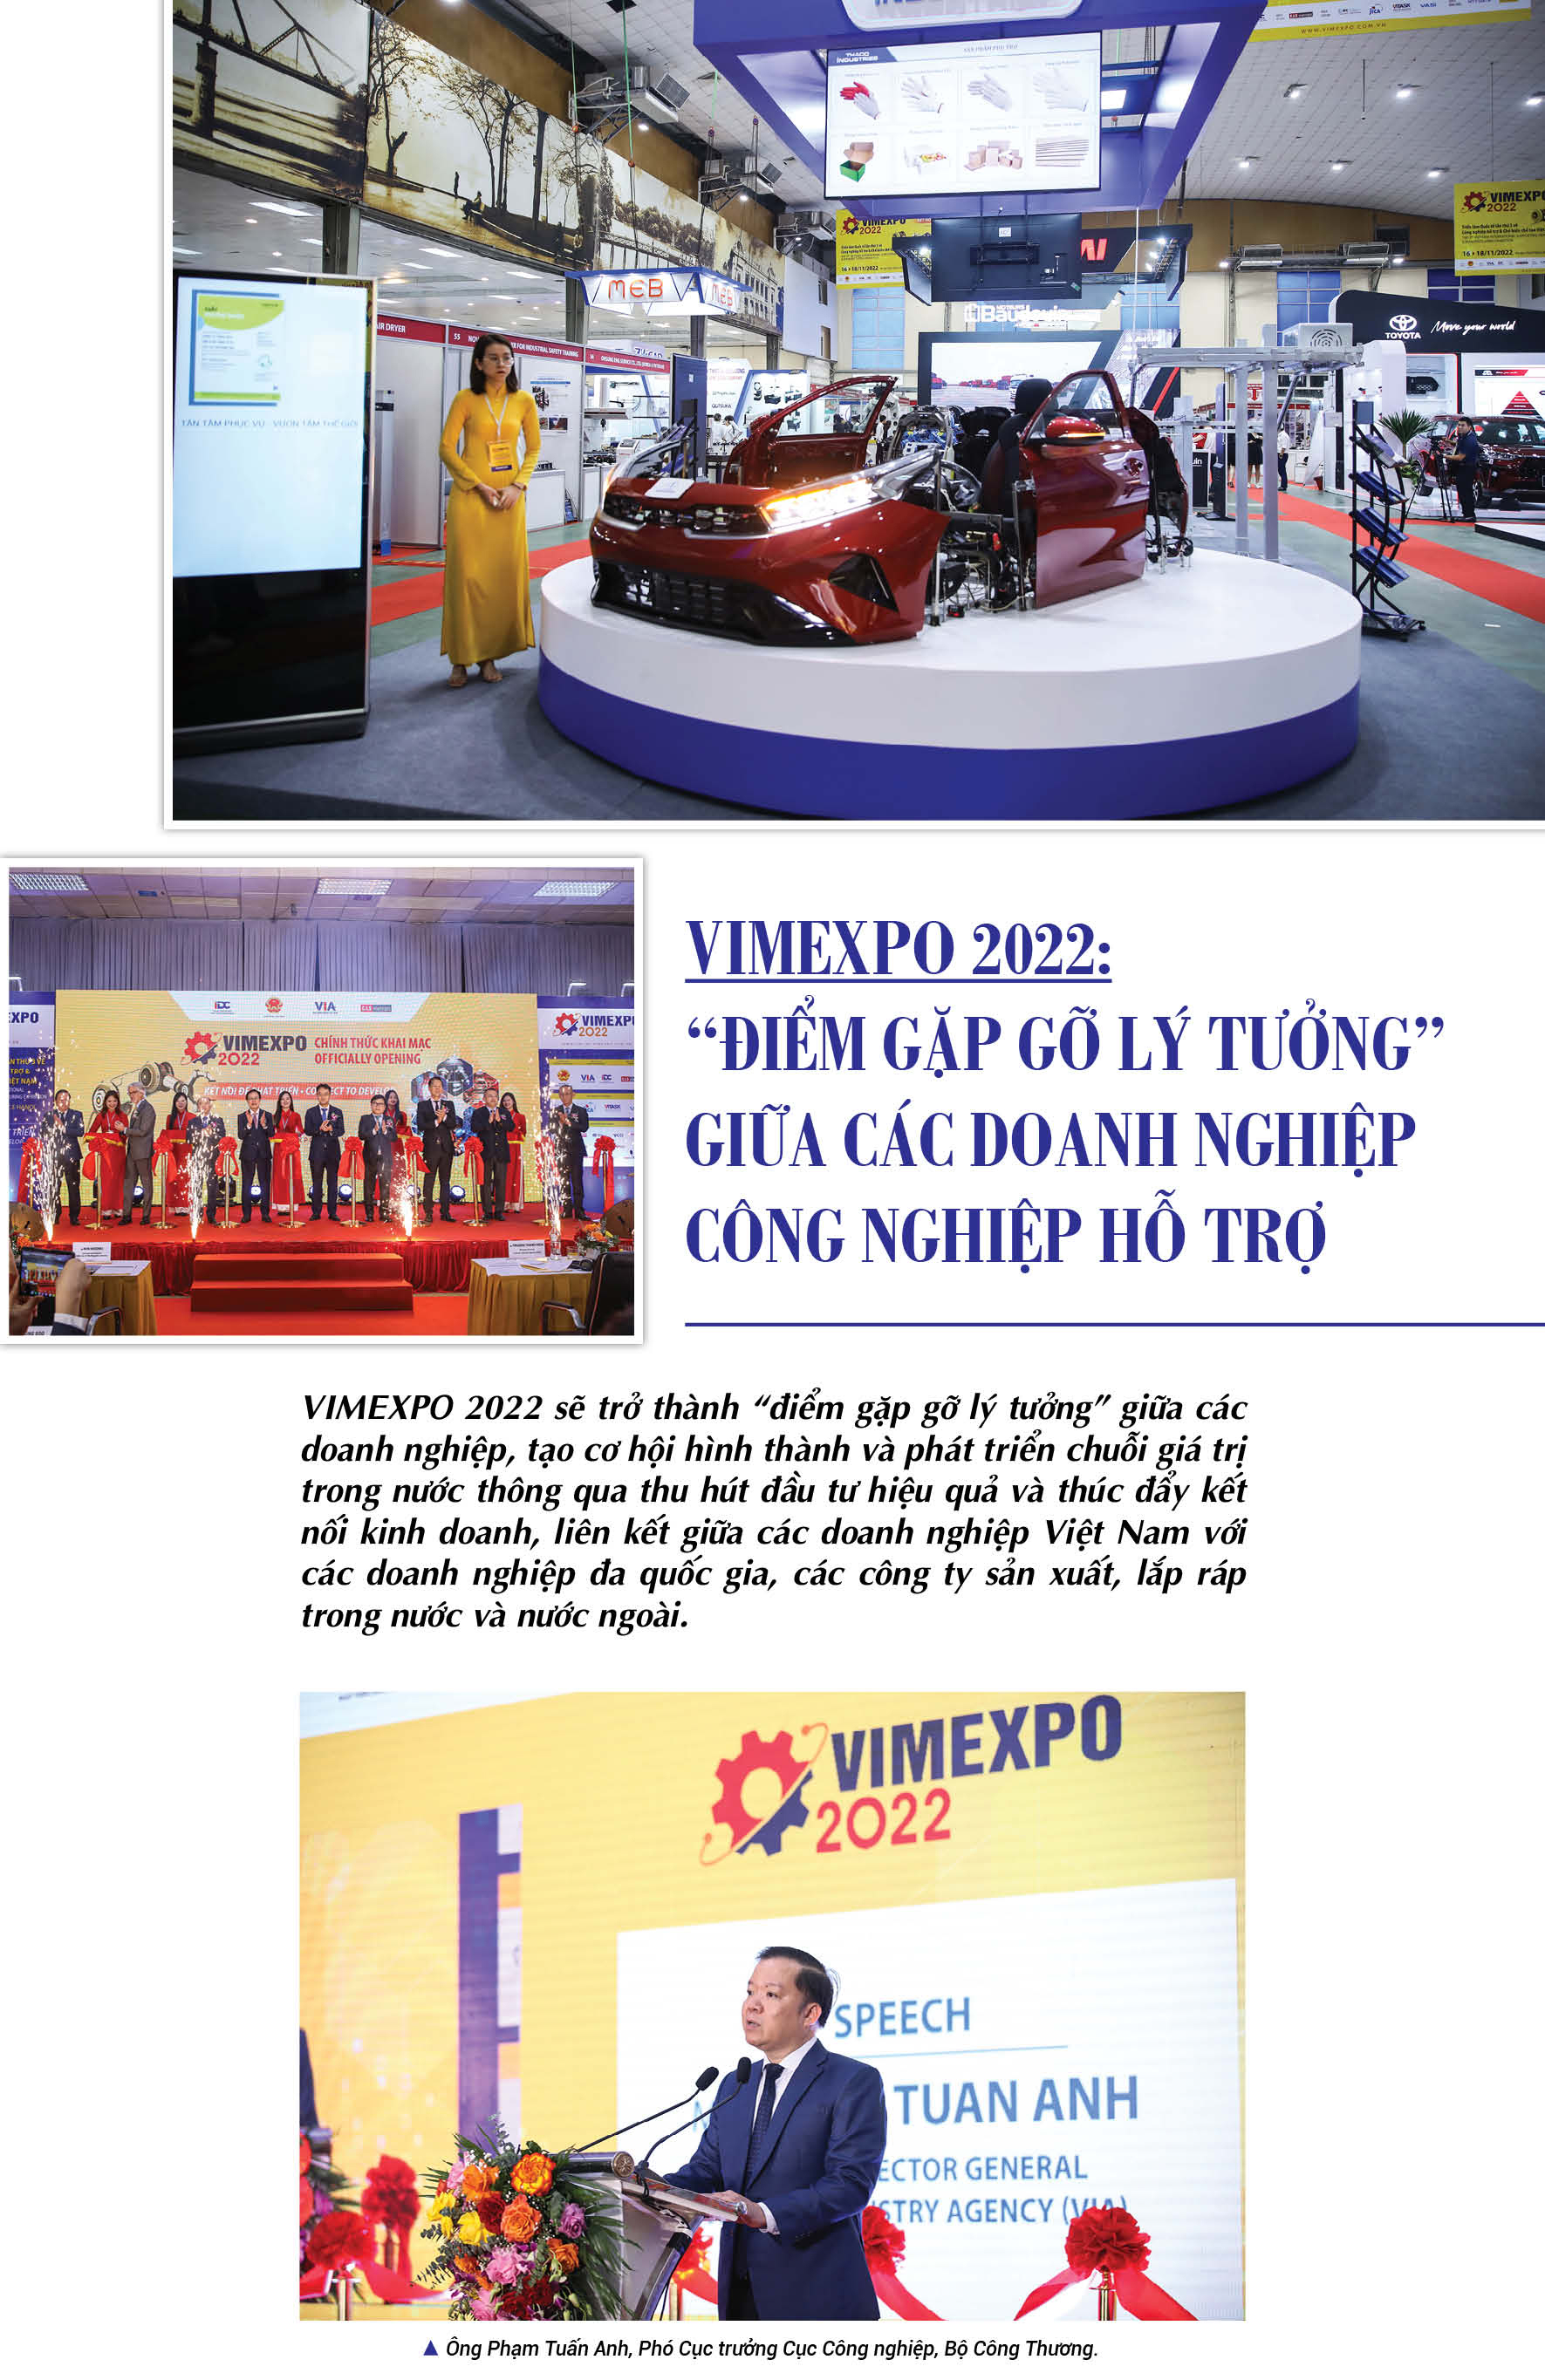 vimexpo 2022 diem gap go ly tuong giua cac doanh nghiep cong nghiep ho tro hinh 1